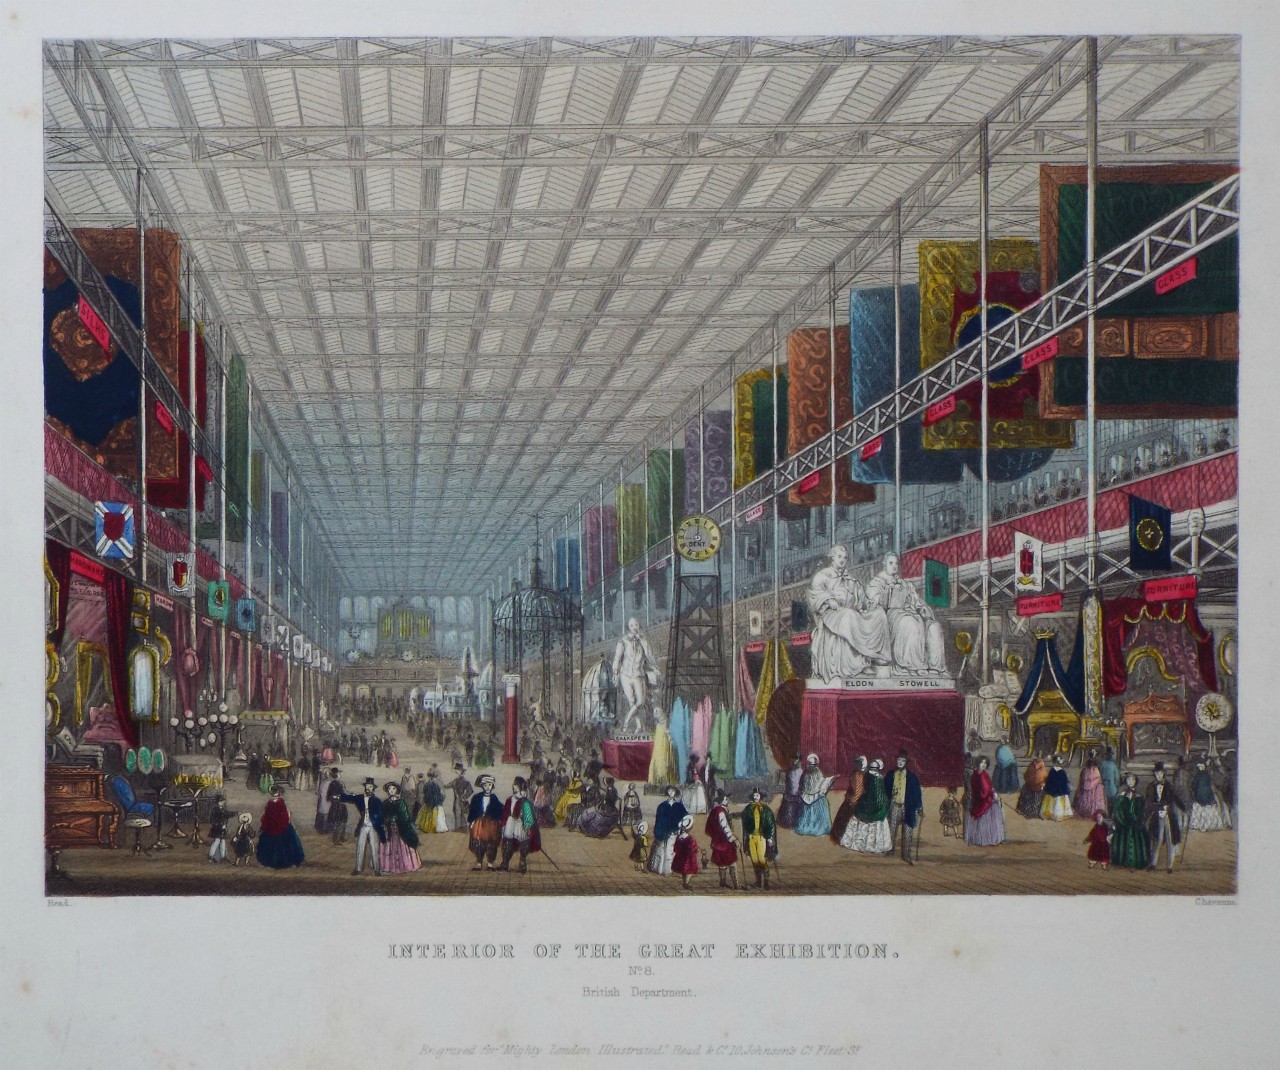 Print - Interior of the Great Exhibition. No.8. British Department. - 